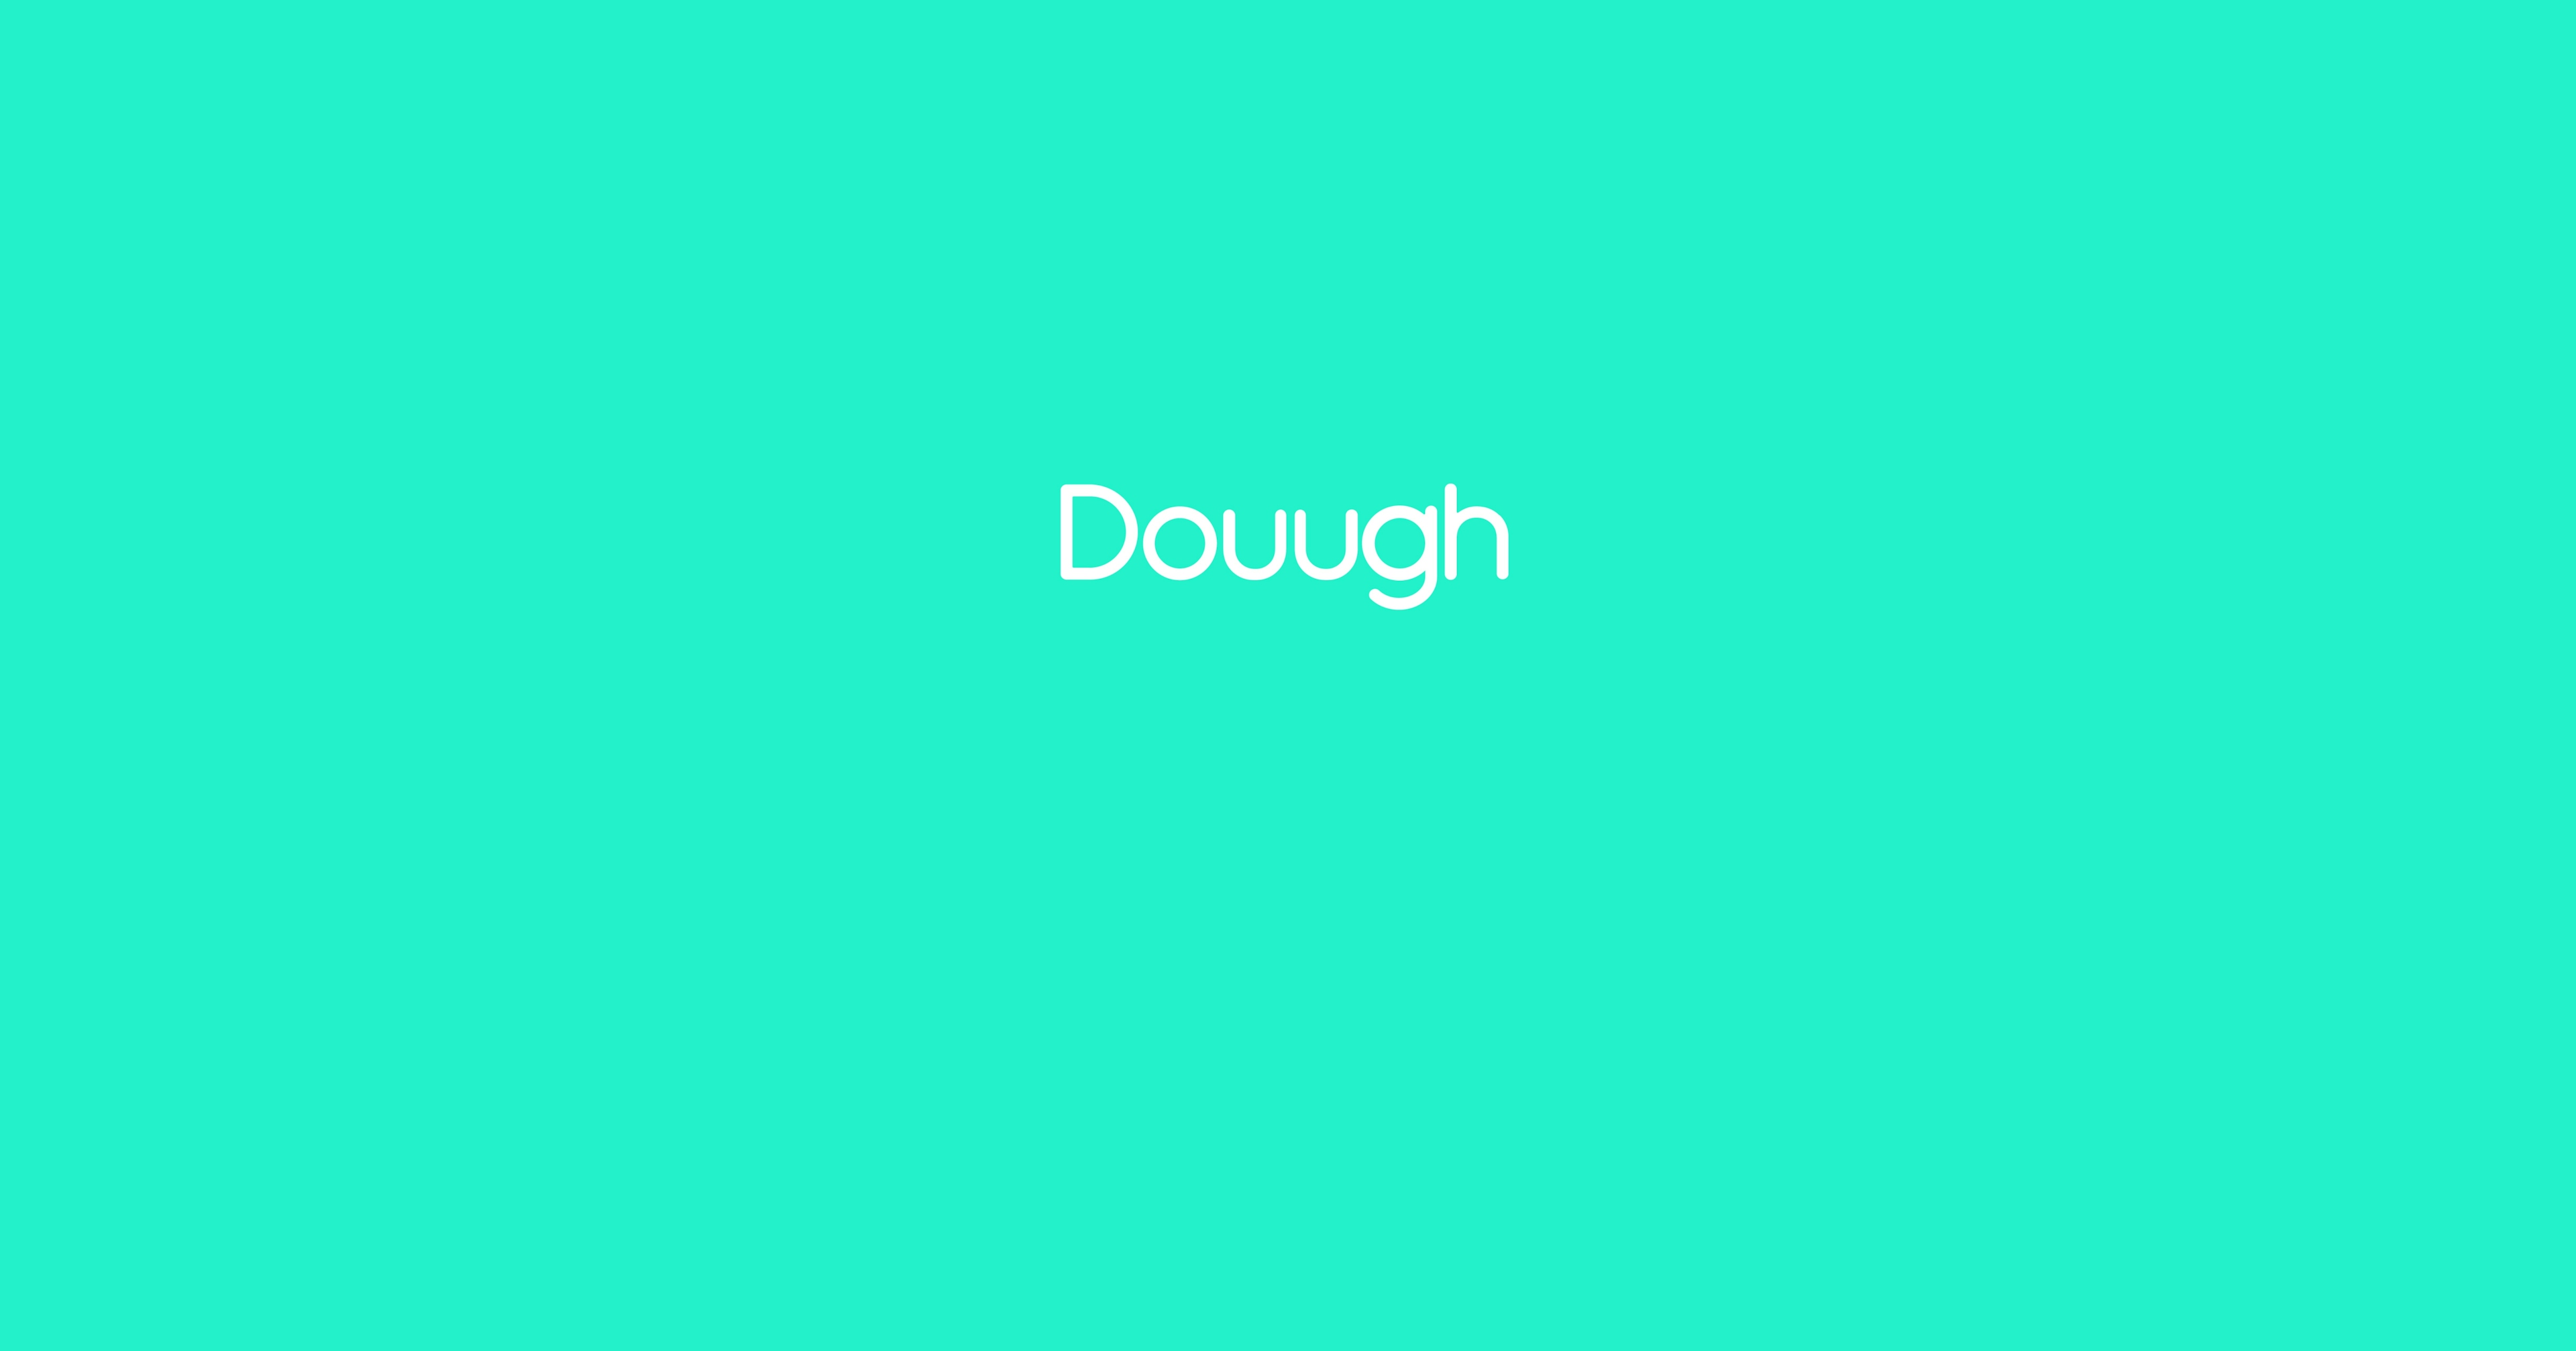 Douugh investor hub background image